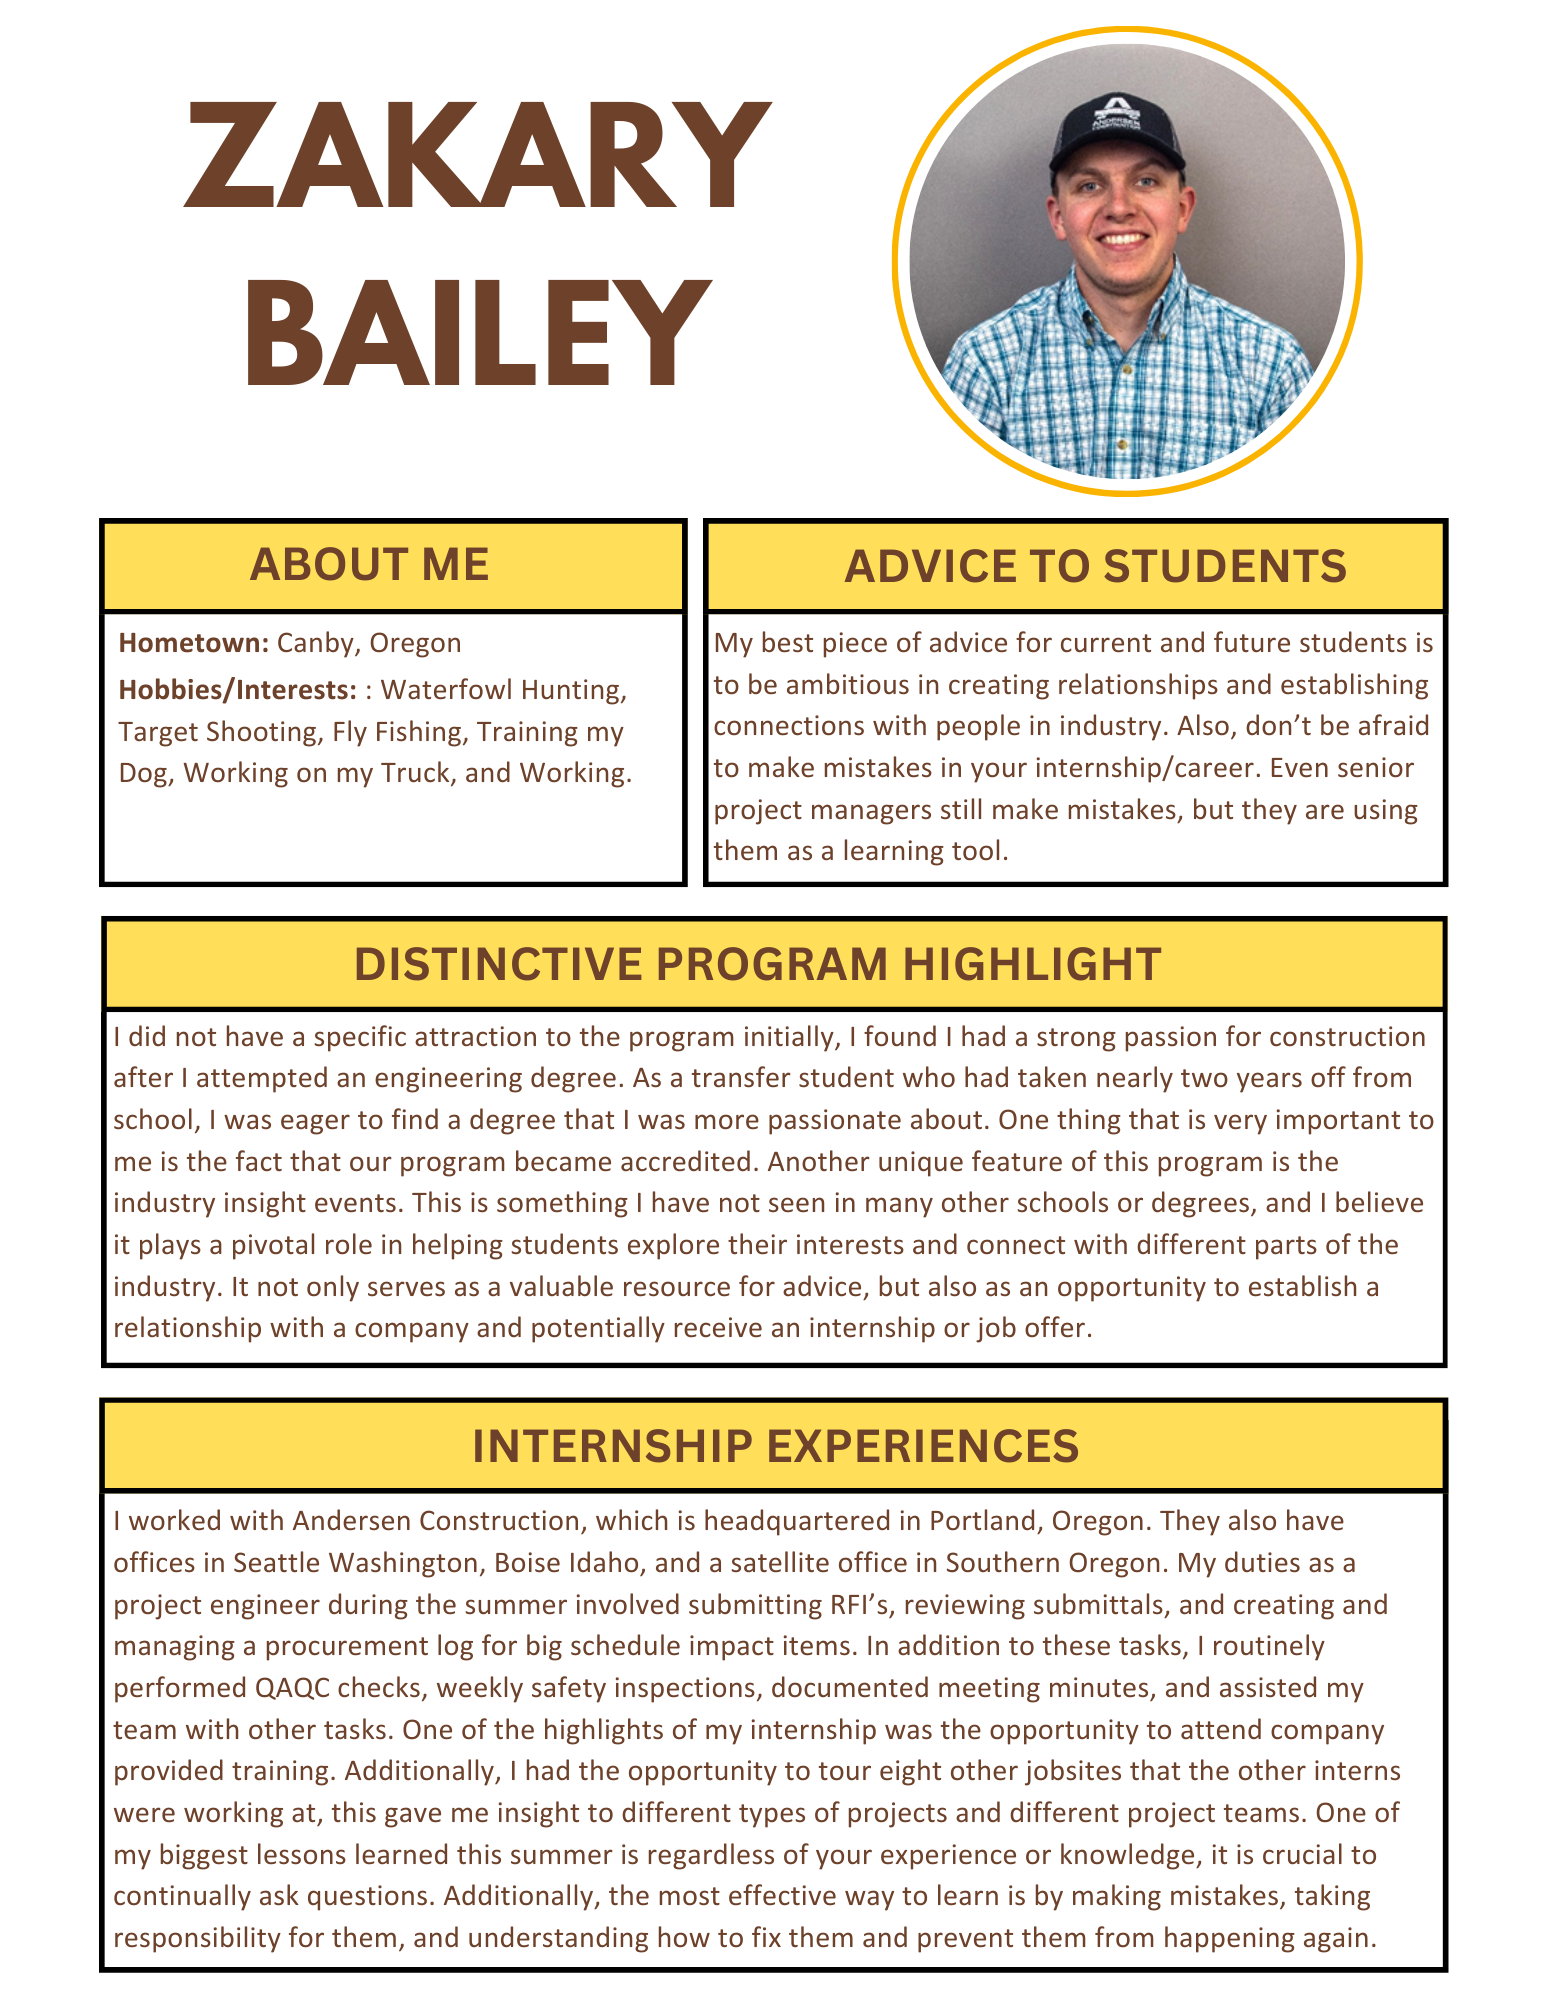 Zakary Bailey Biography